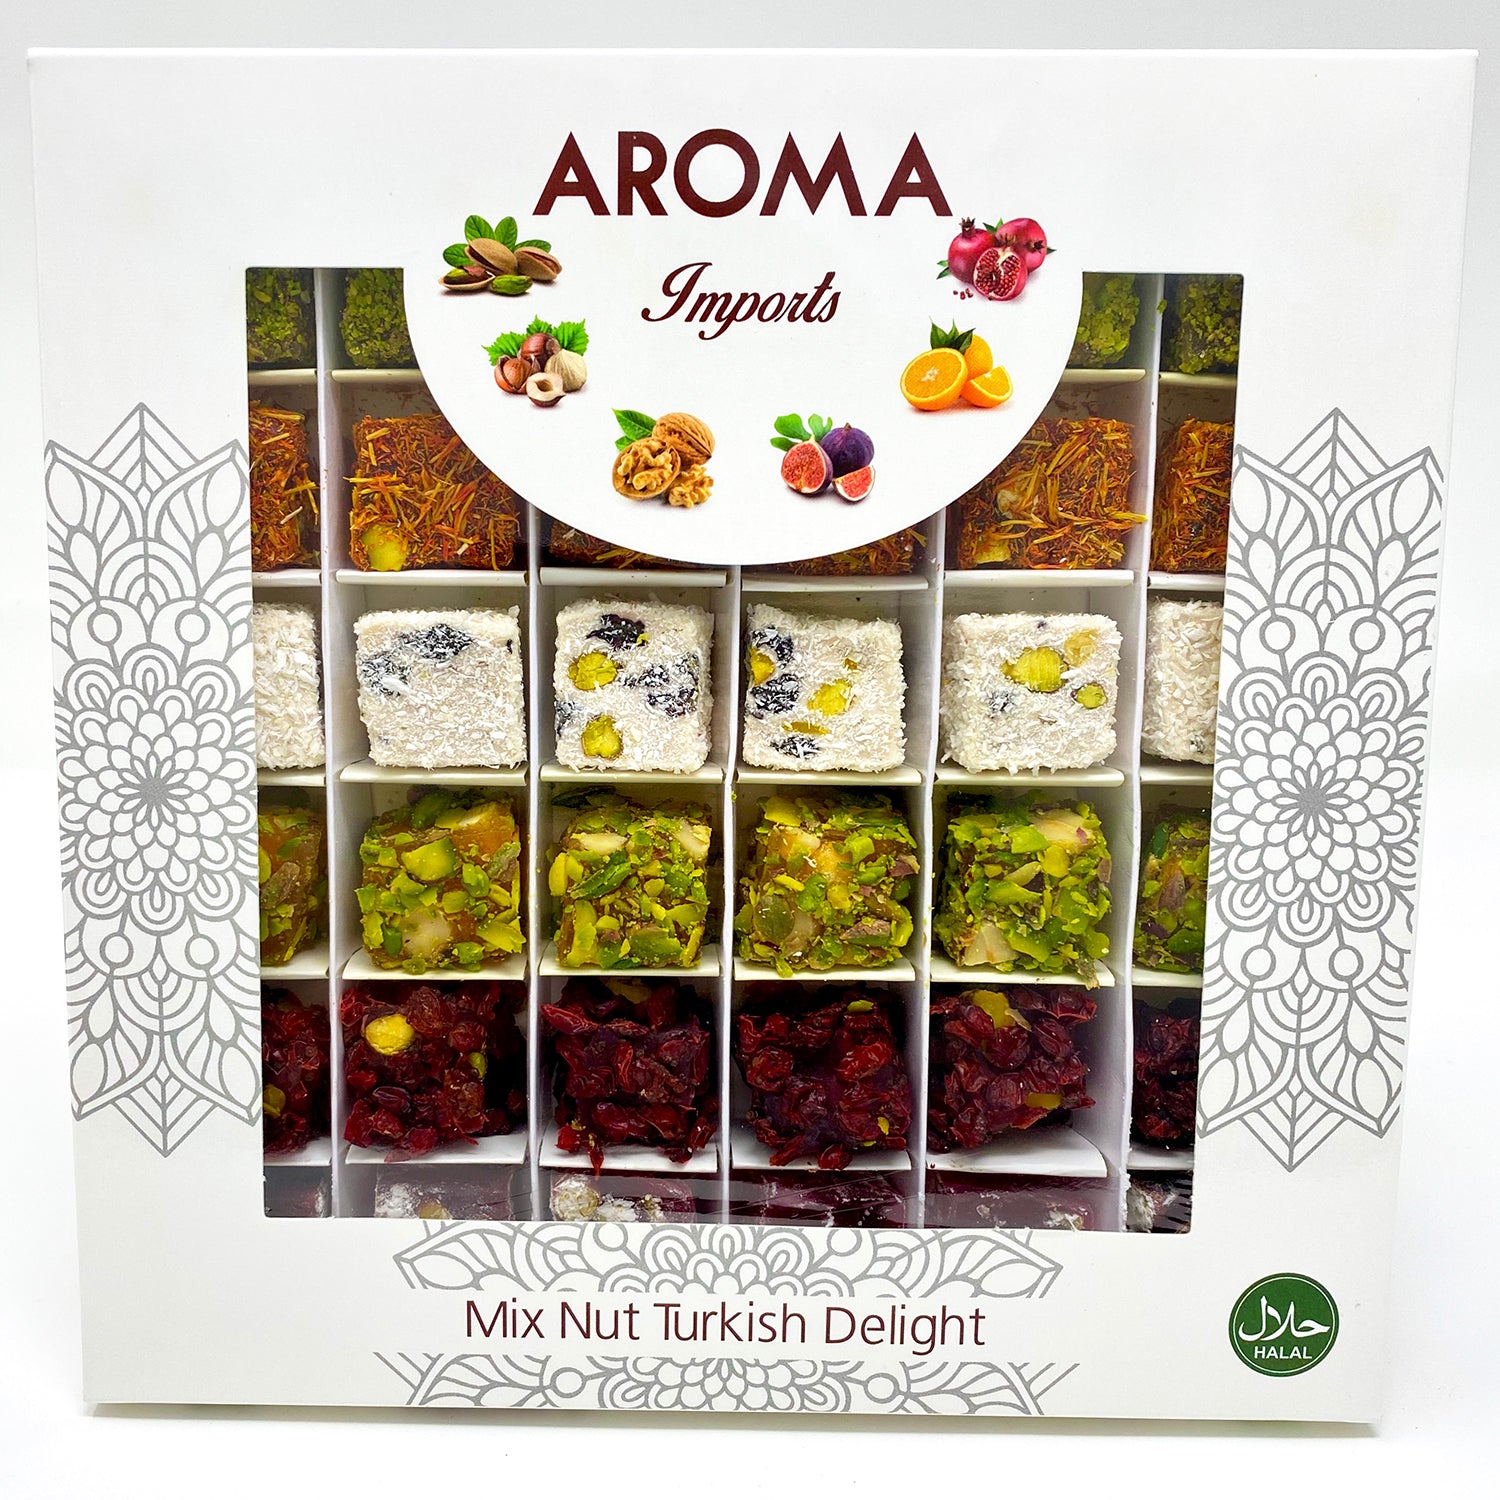 Mixed Nut Turkish Delight - Aroma Imports